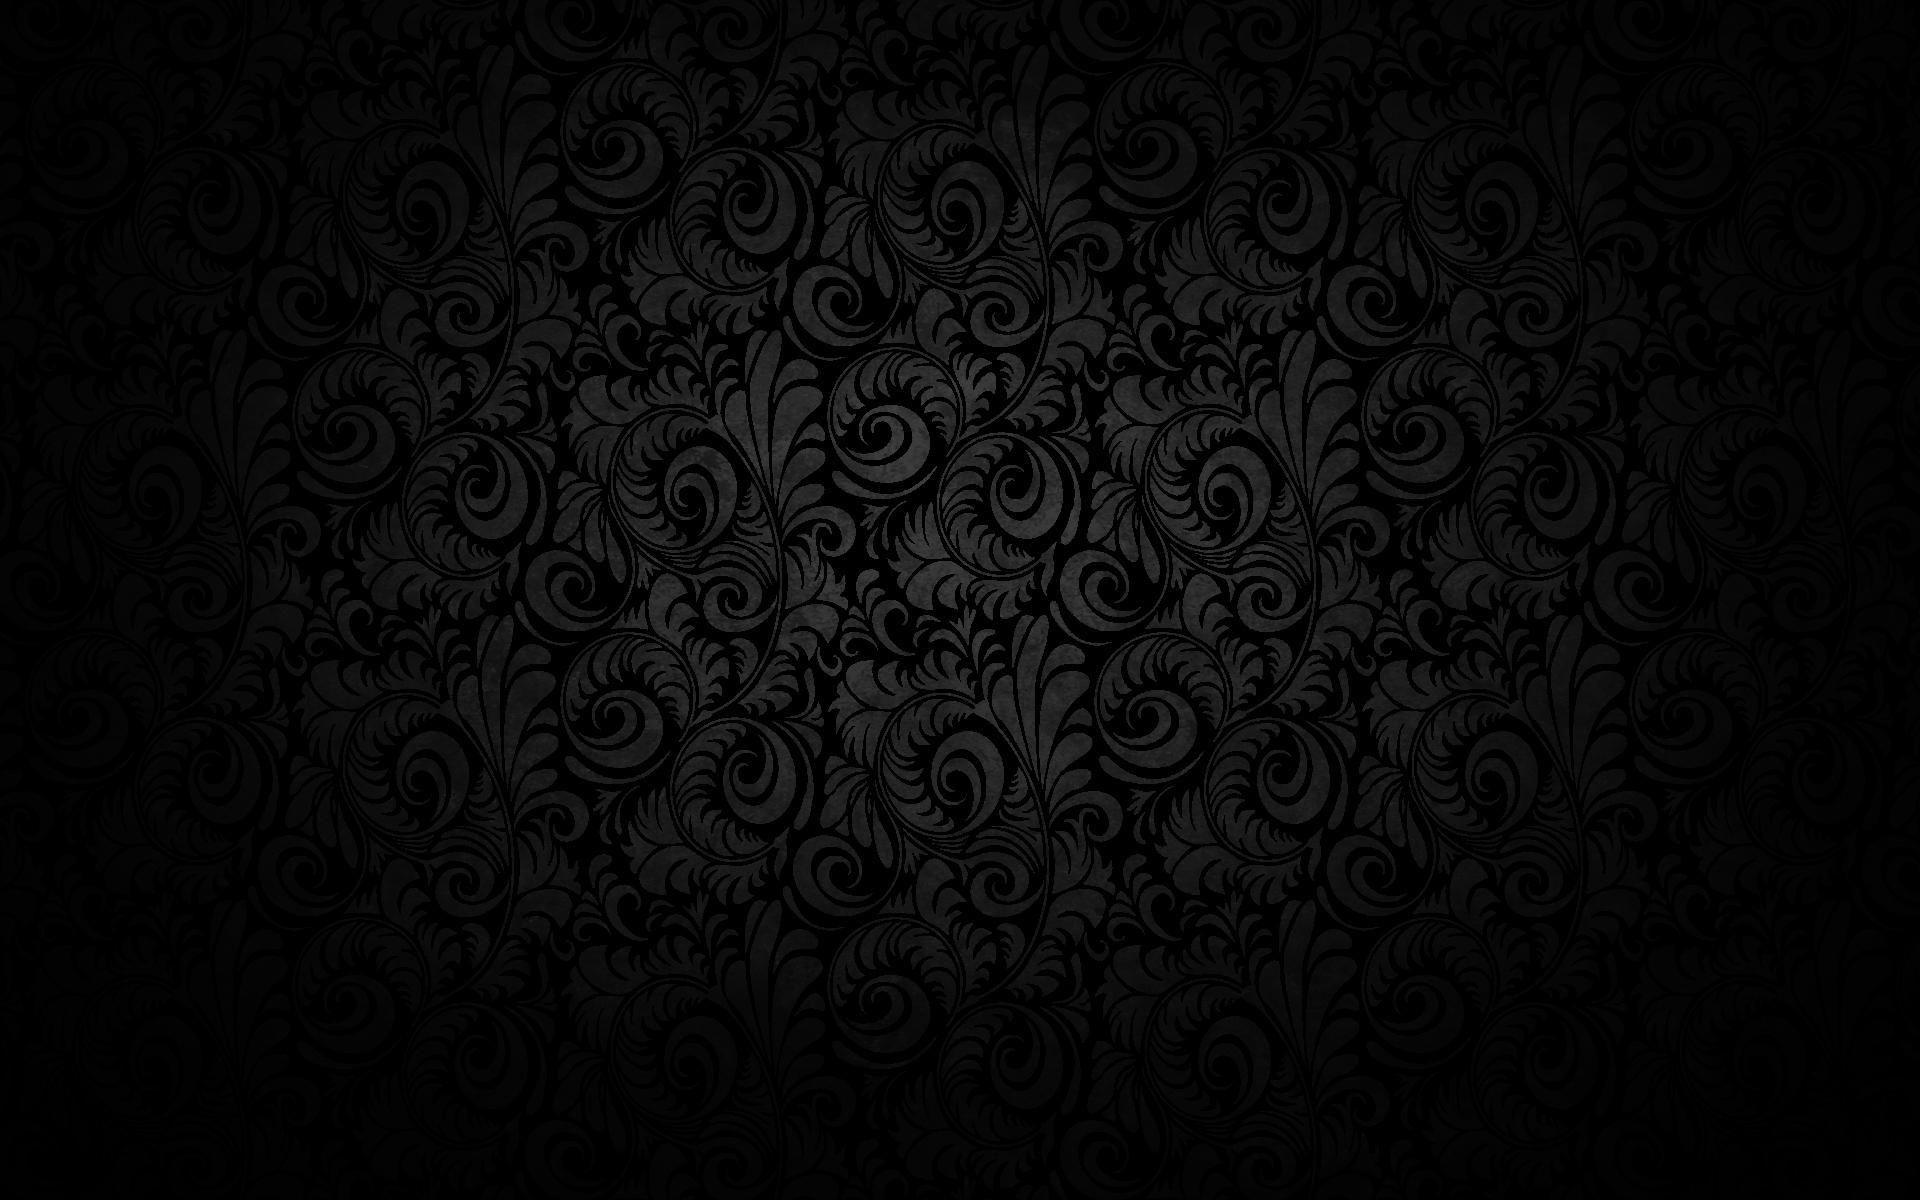 Black Lace Seamless Pattern Stock Illustration - Download Image